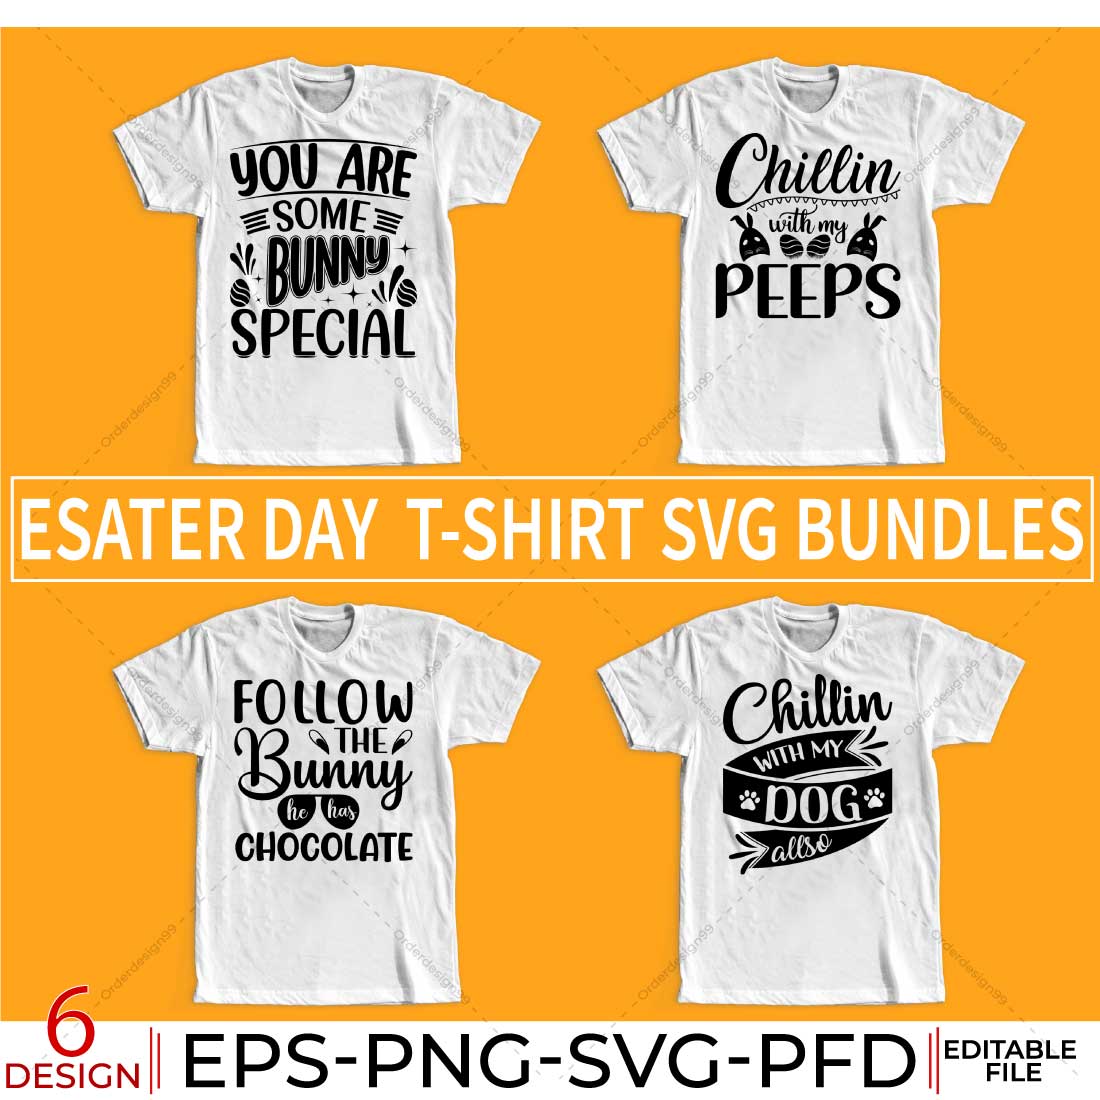 Easter day SVG T Shirt Designs 6 Bundle preview image.